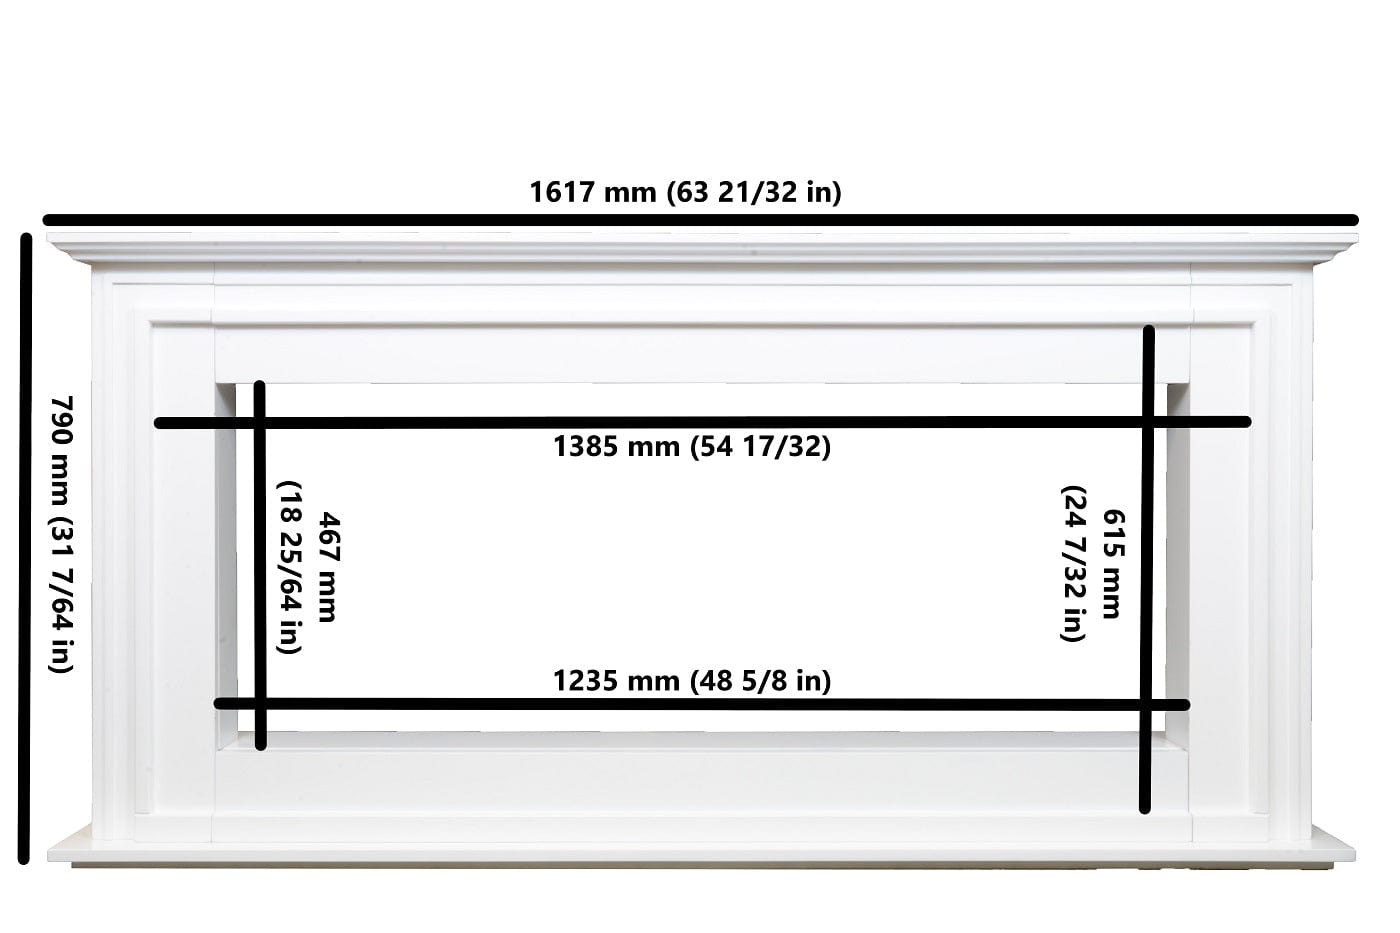 Dimensions of the Touchstone Encase Surround Mantel